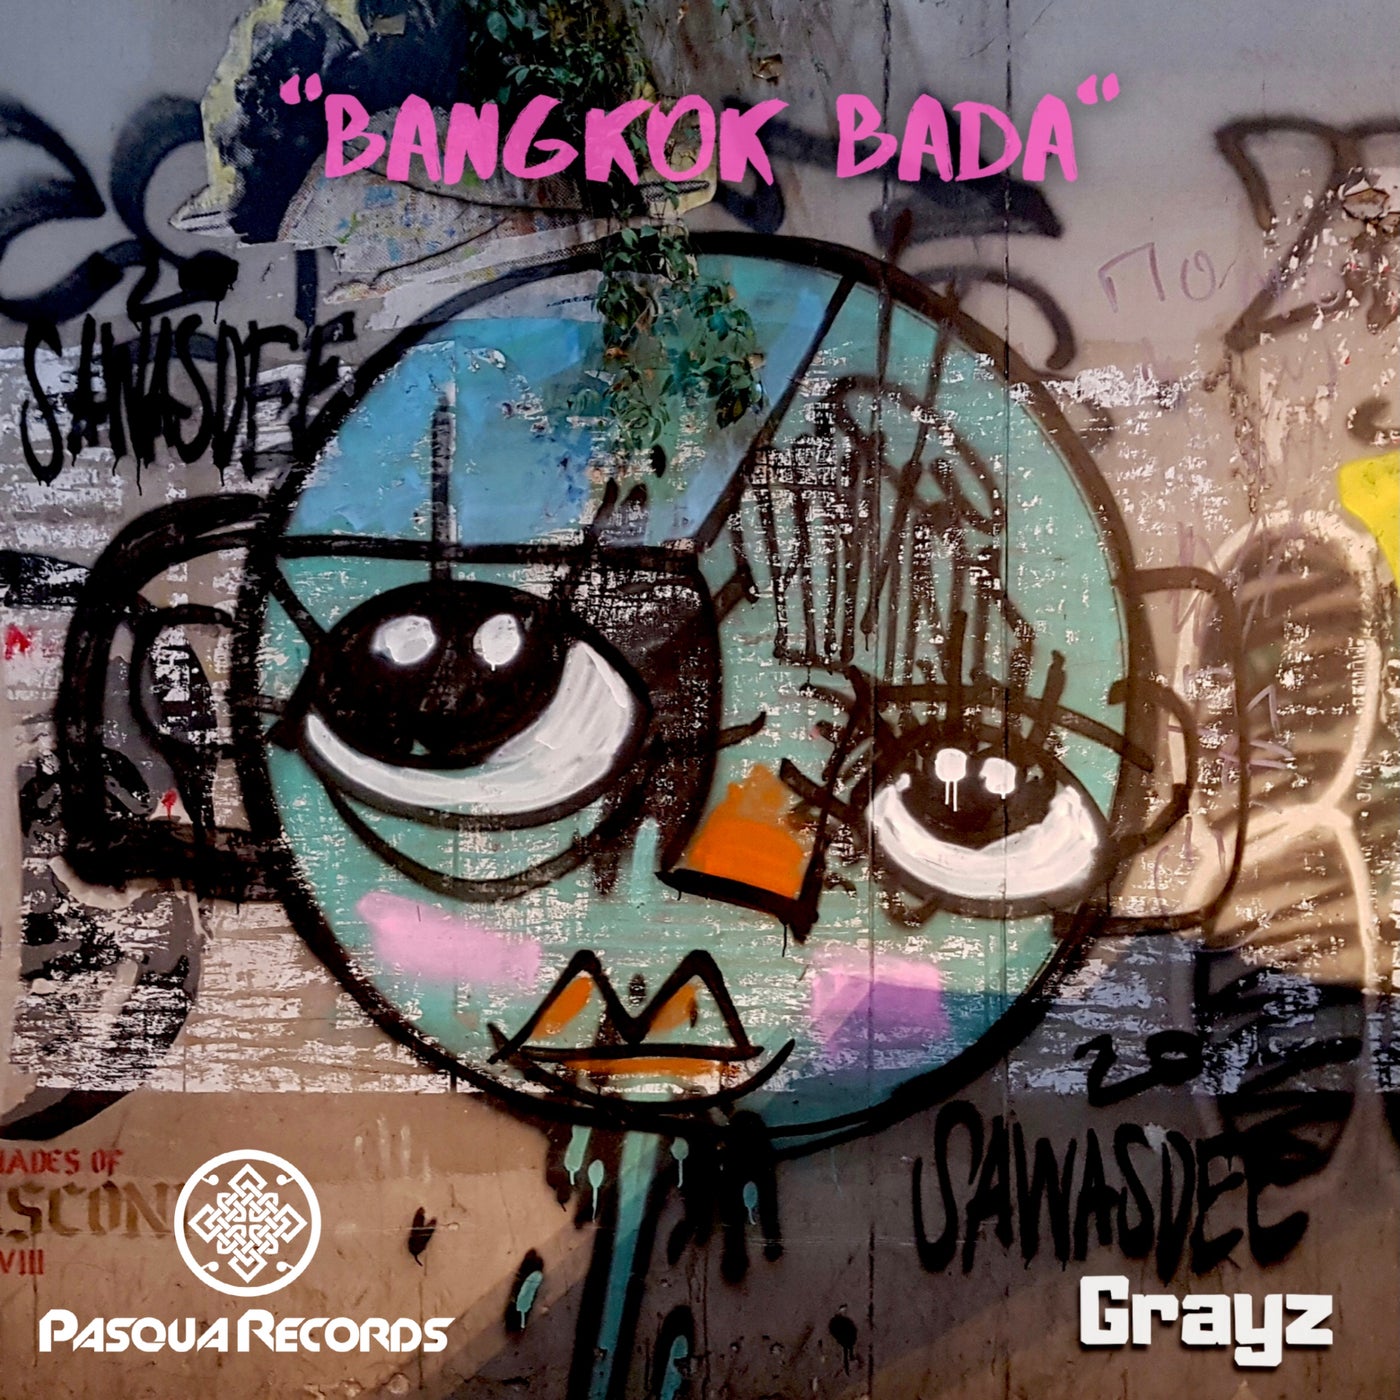 Bangkok Bada